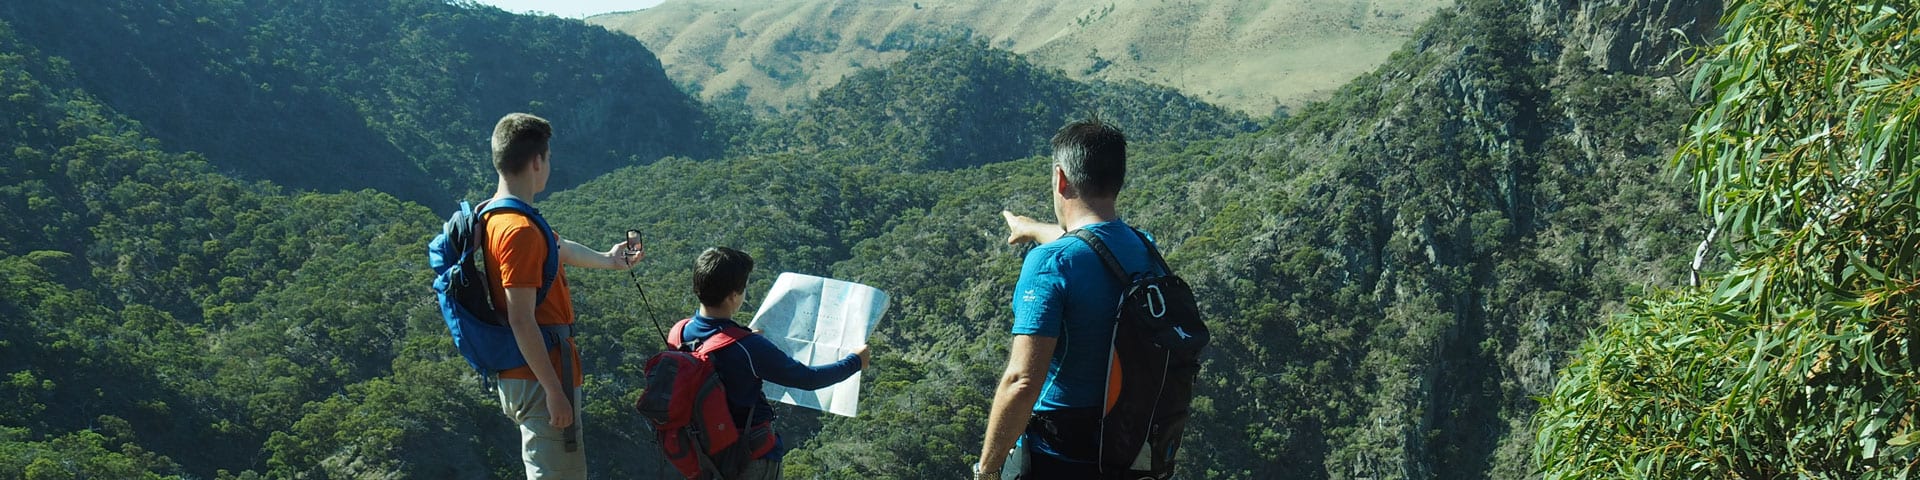 Darren Edwards Trail Hiking Australia